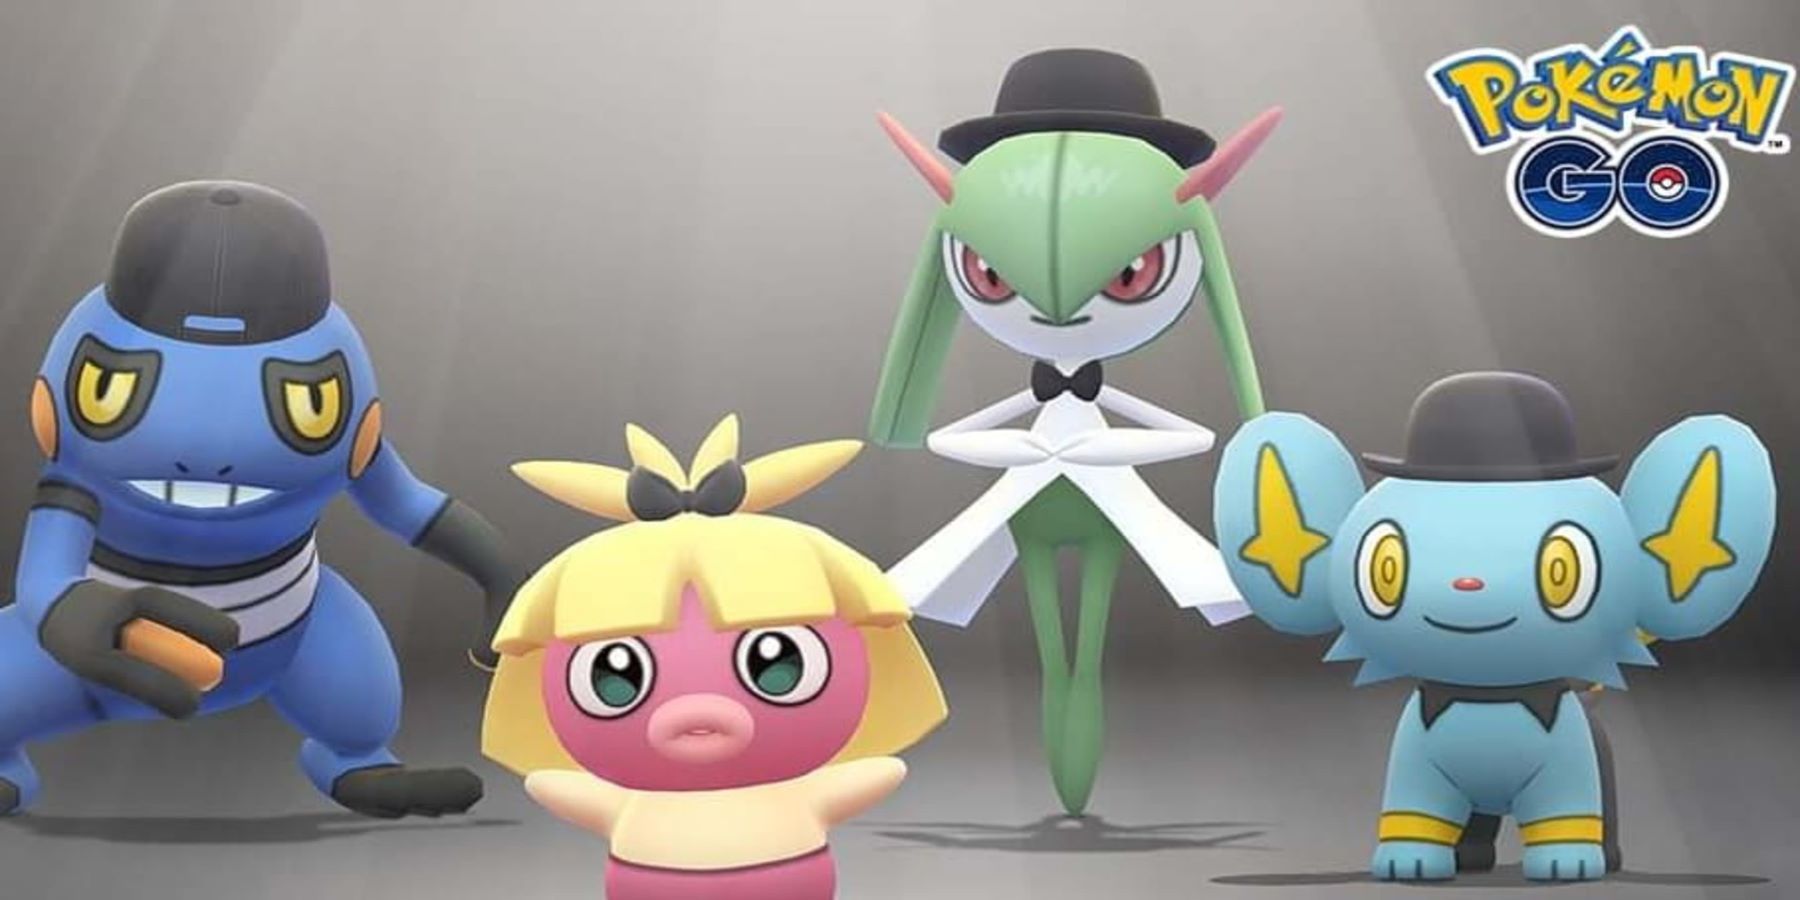 Pokemon Go의 패션 위크 이벤트 이벤트는 캐릭터 커스터마이즈의 결함을 강조합니다.